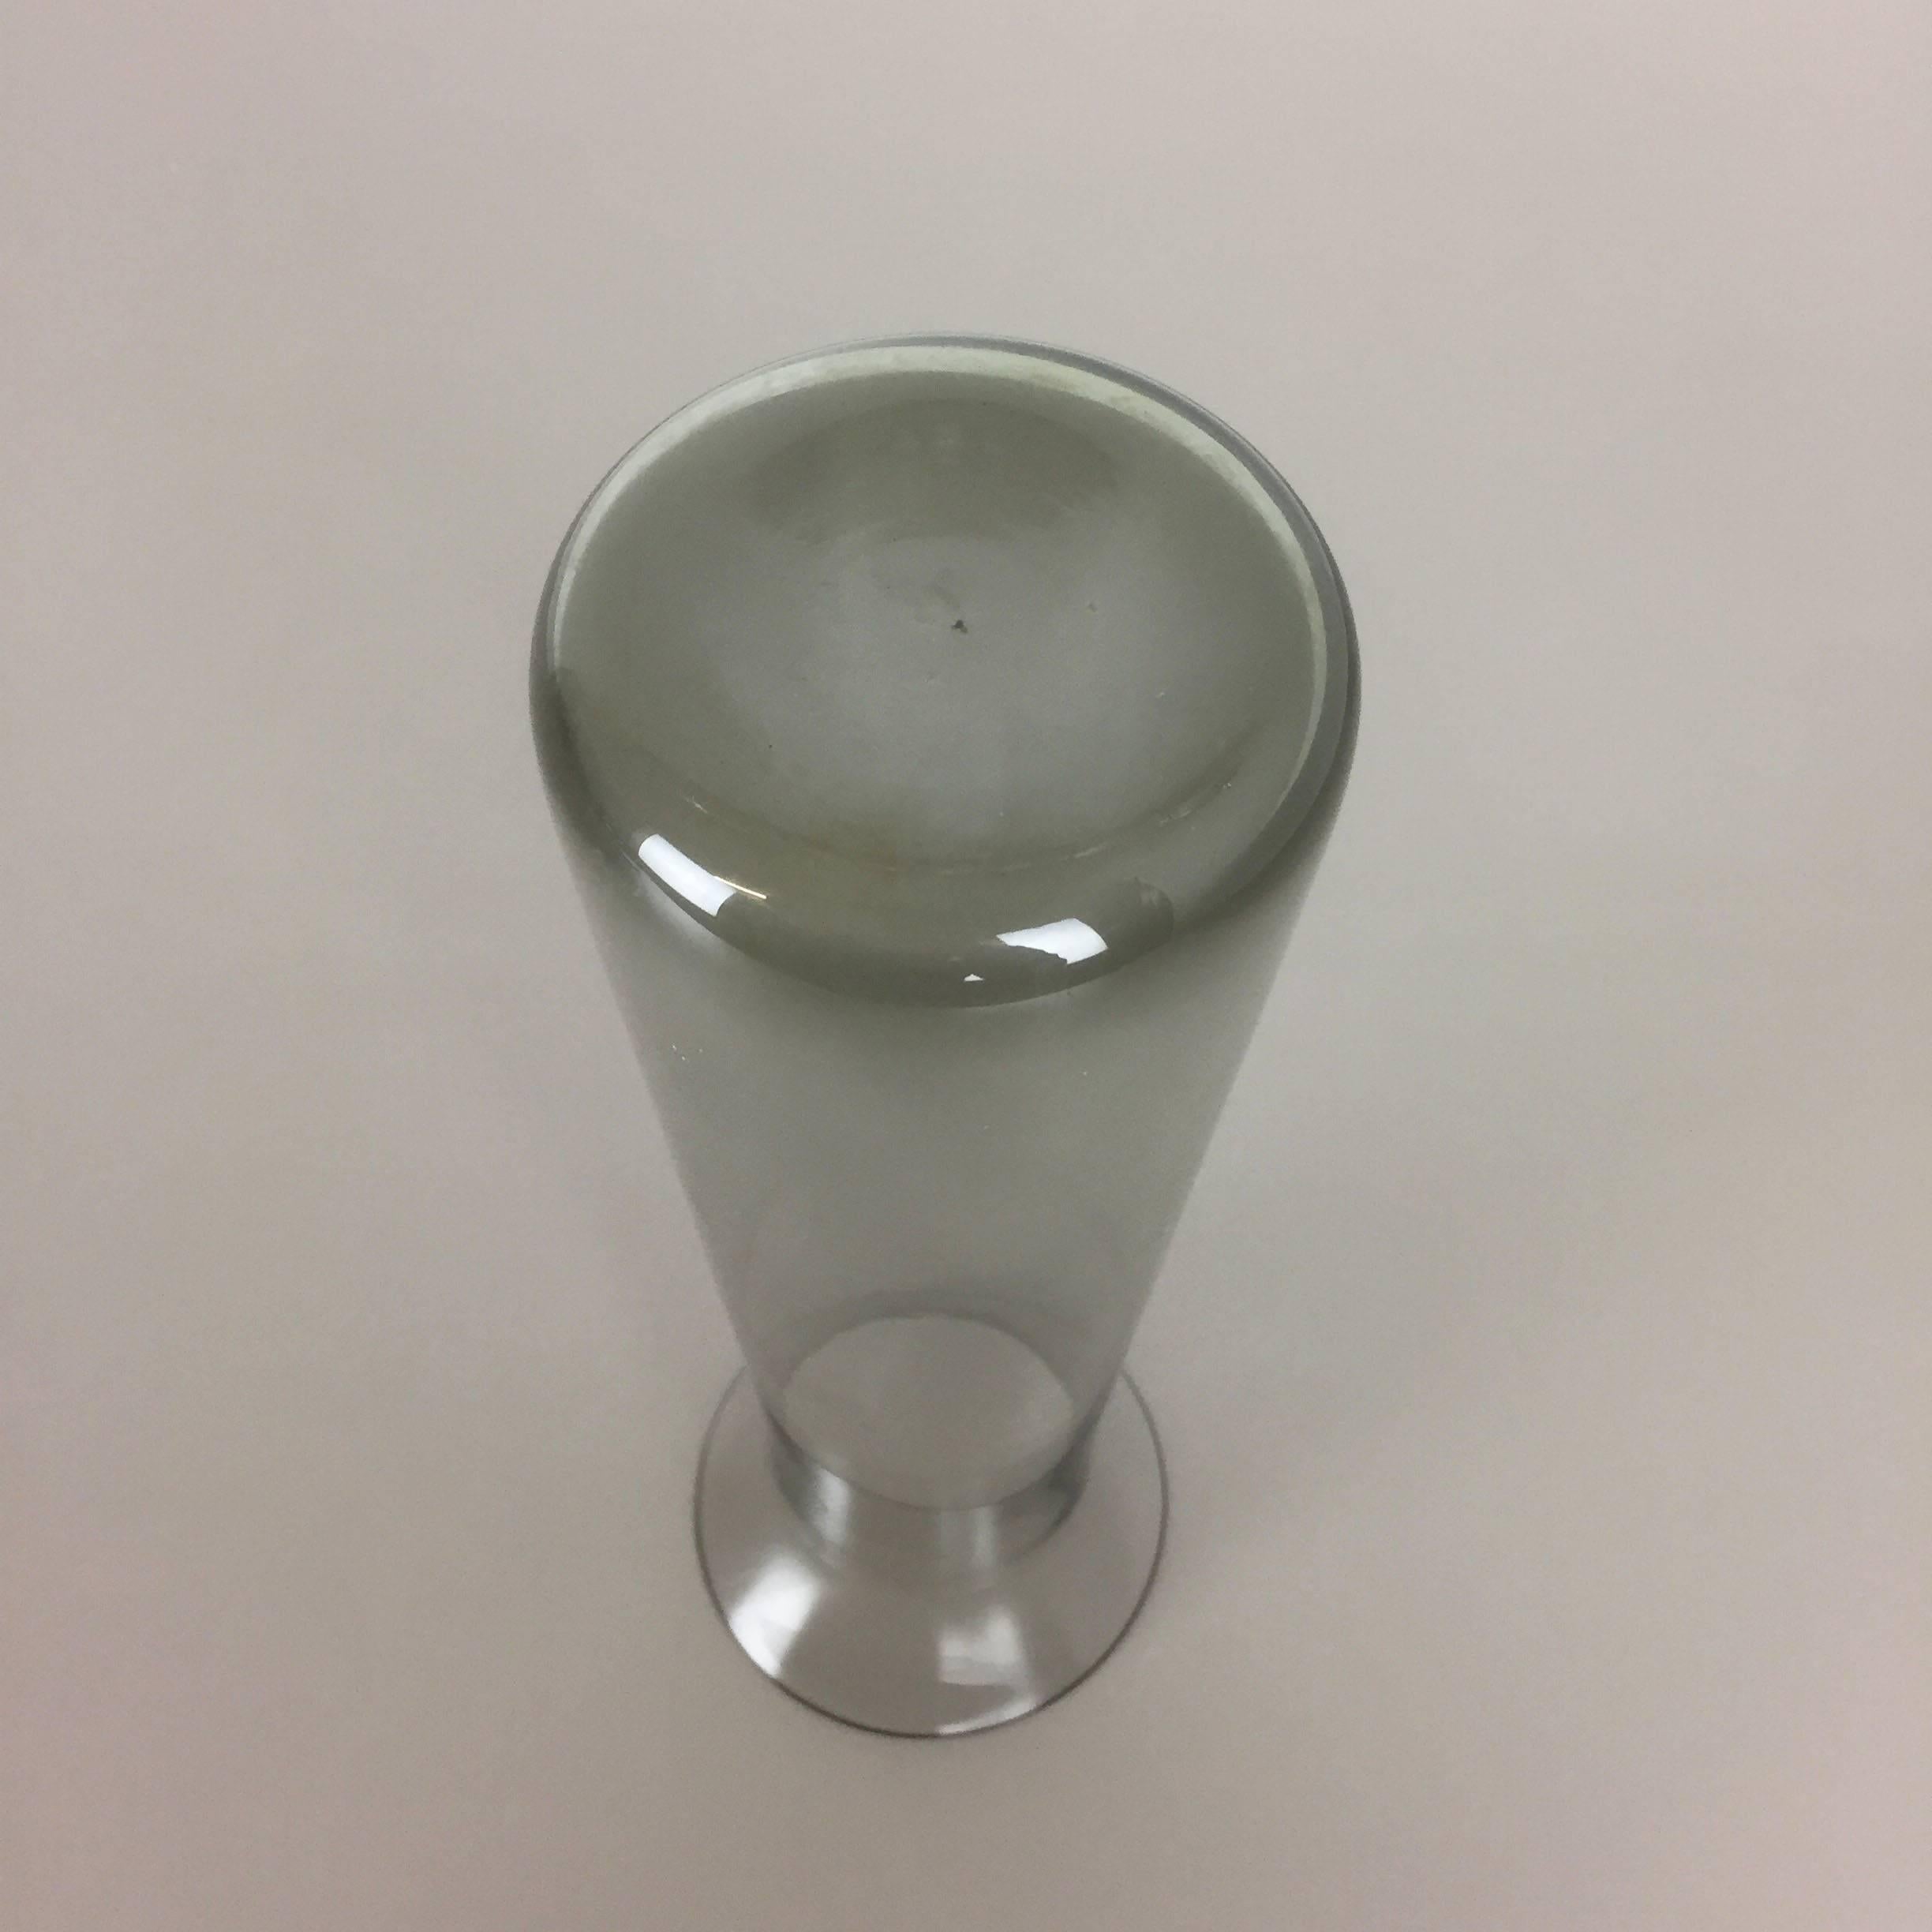 Super Rare Vintage 1960s Glass Turmalin Vase by Wilhelm Wagenfeld for WMF 1